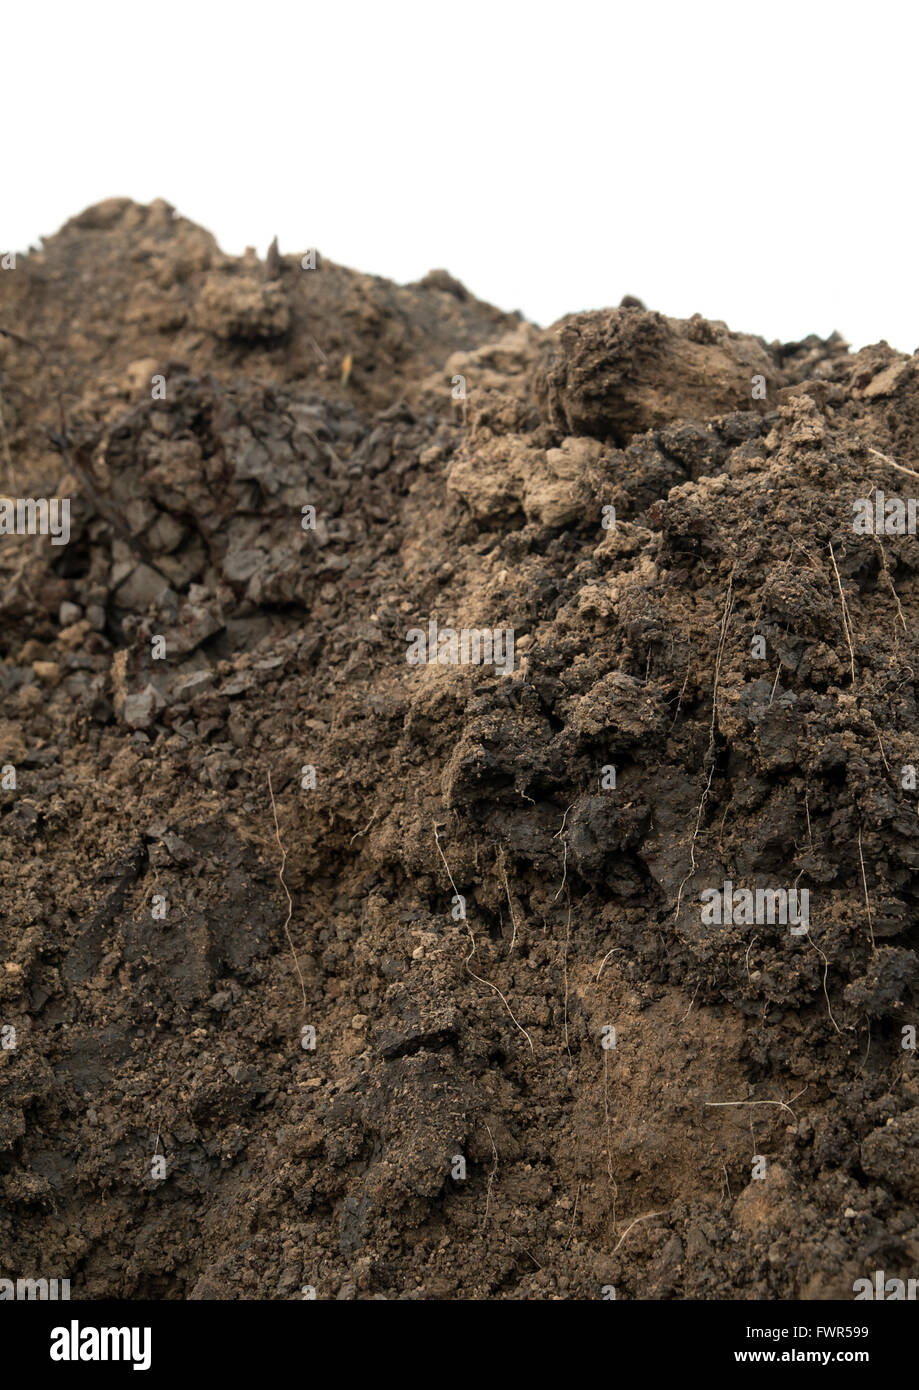 soil isolated on white background Stock Photo